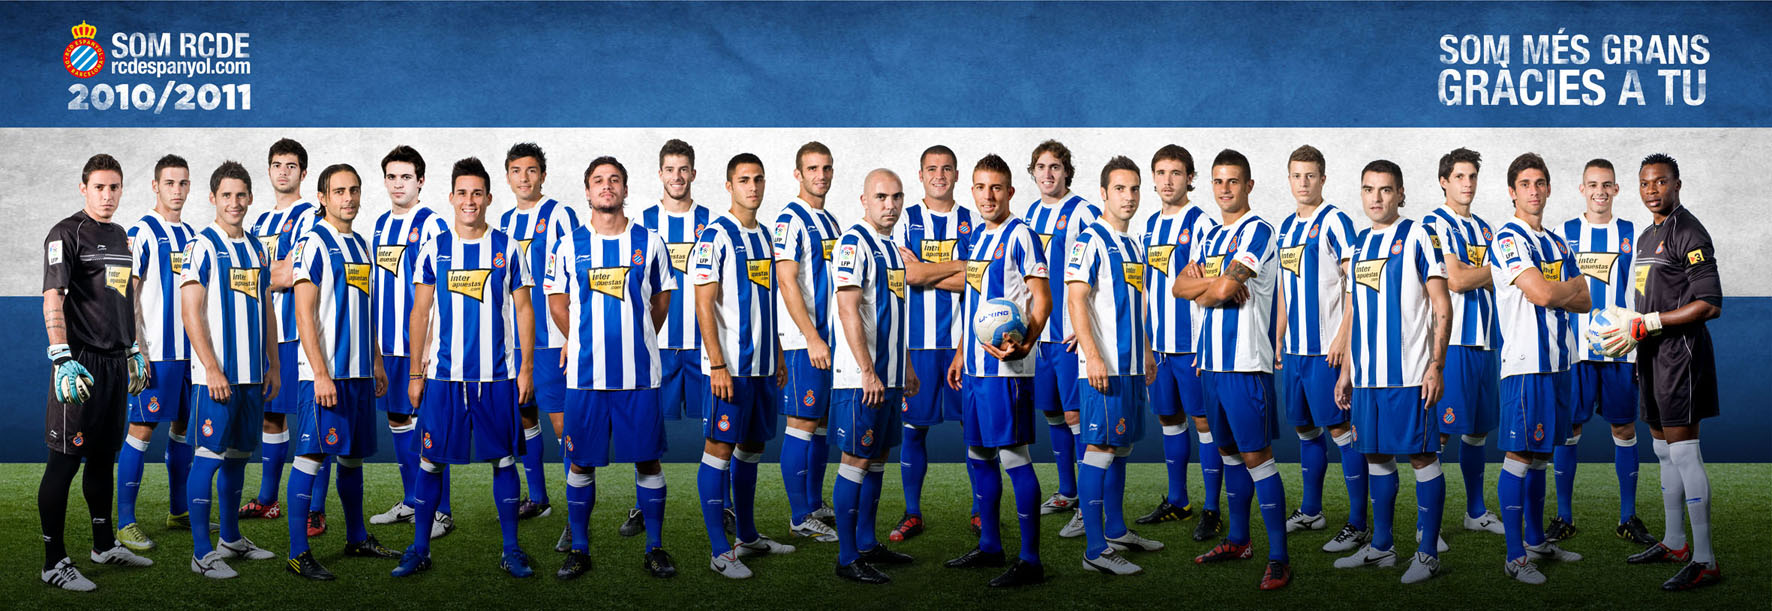 Rcd Espanyol Football Team Wallpaper HD Ongur